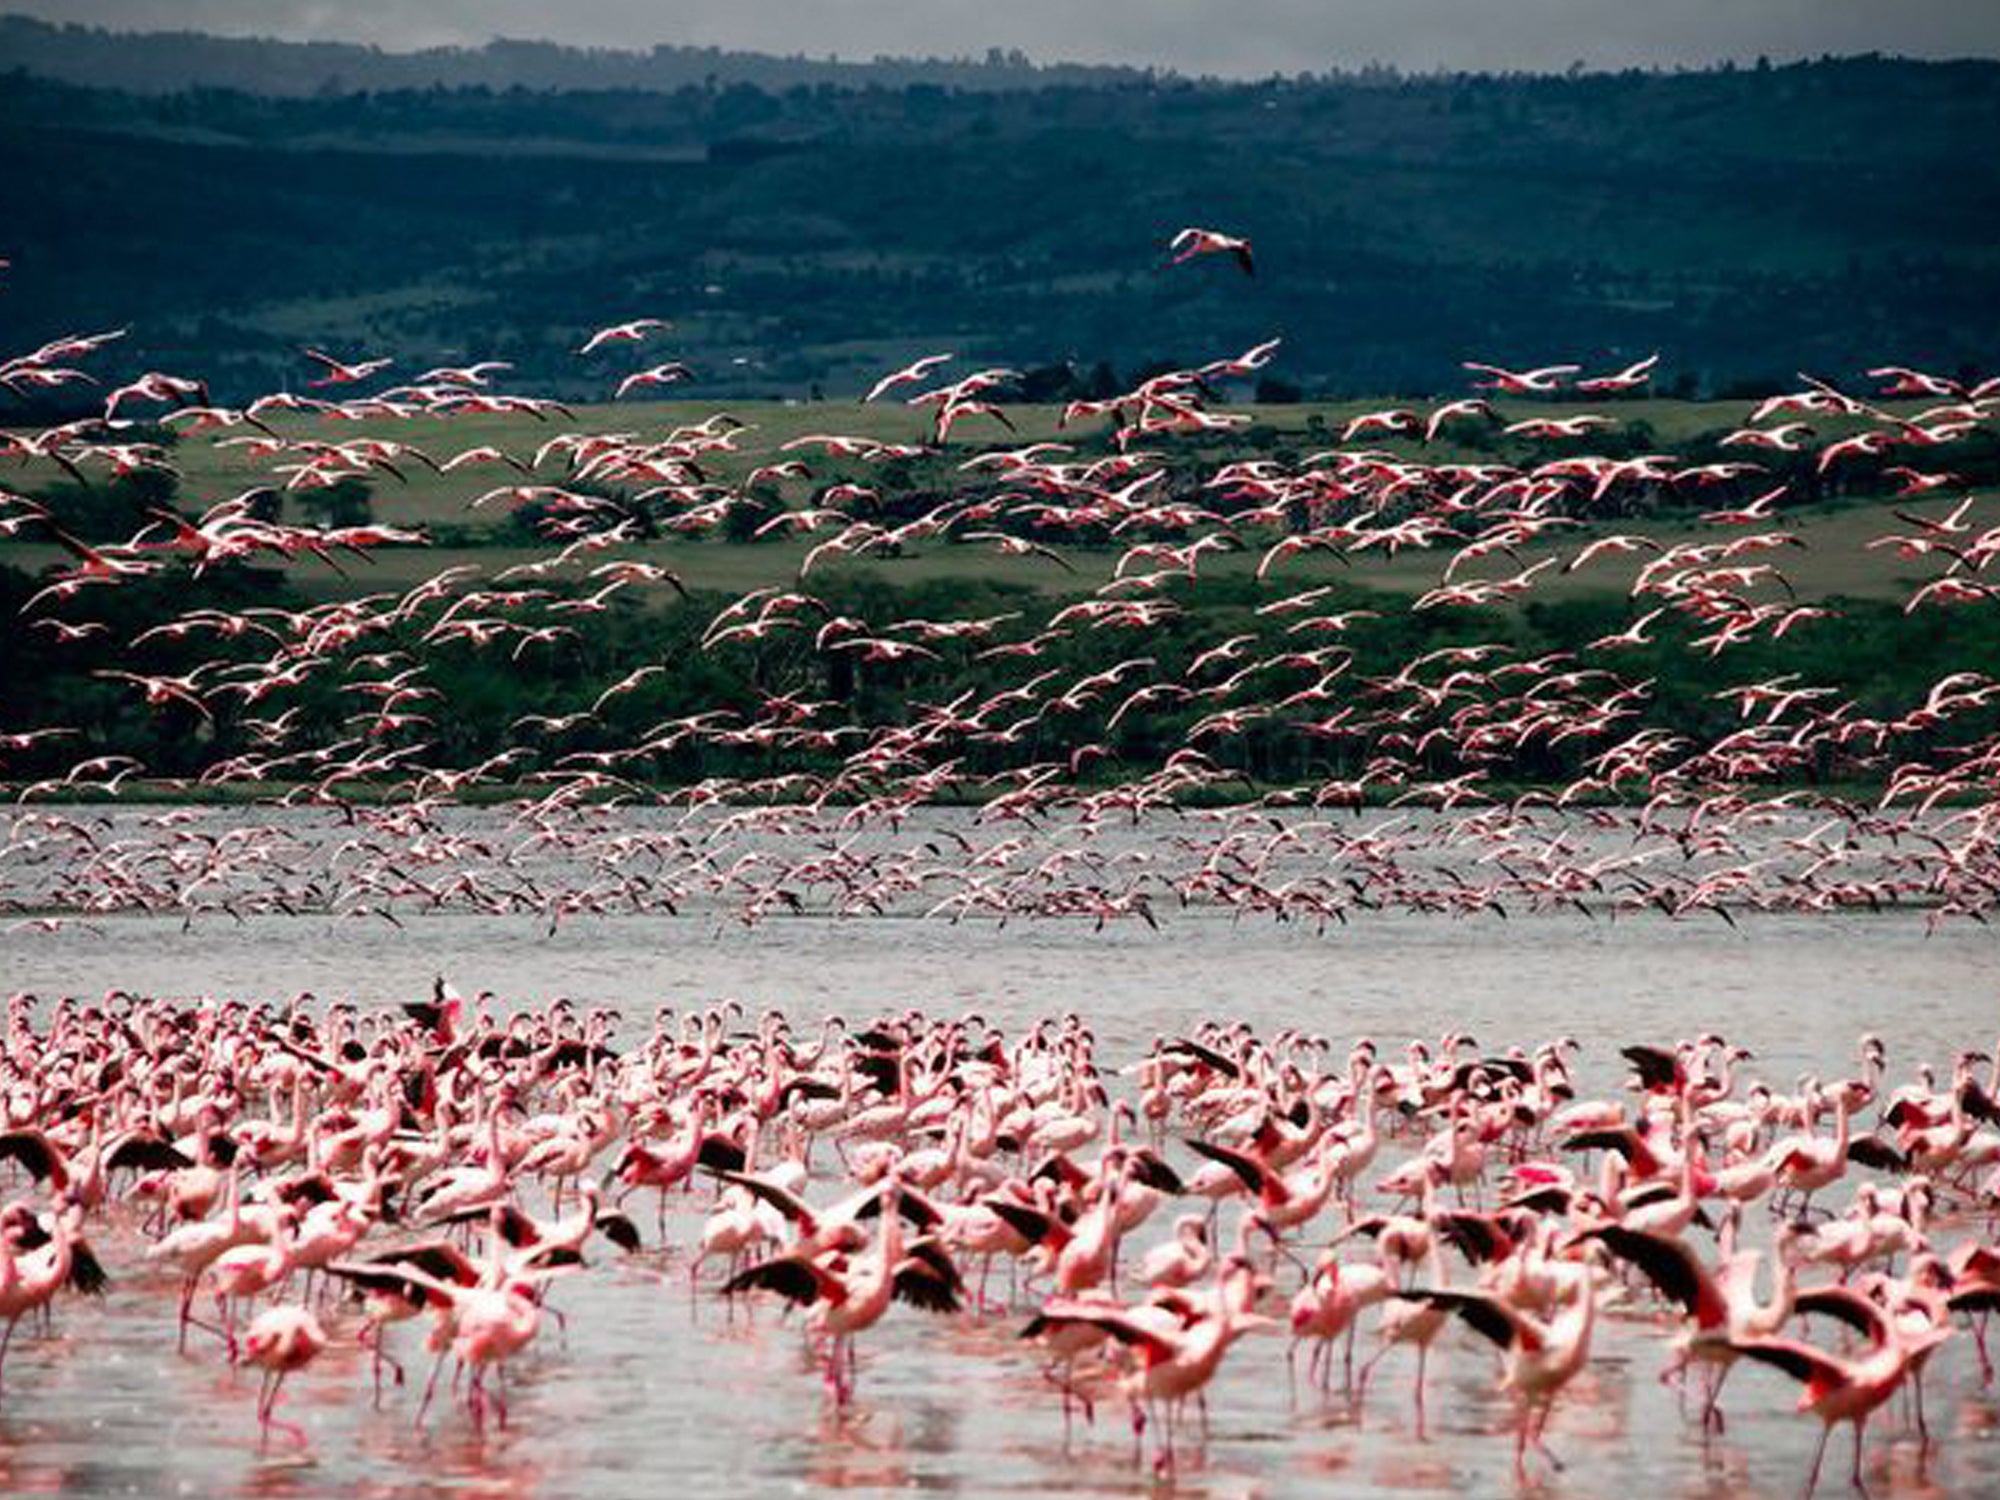 A flamboyance of flamingoes